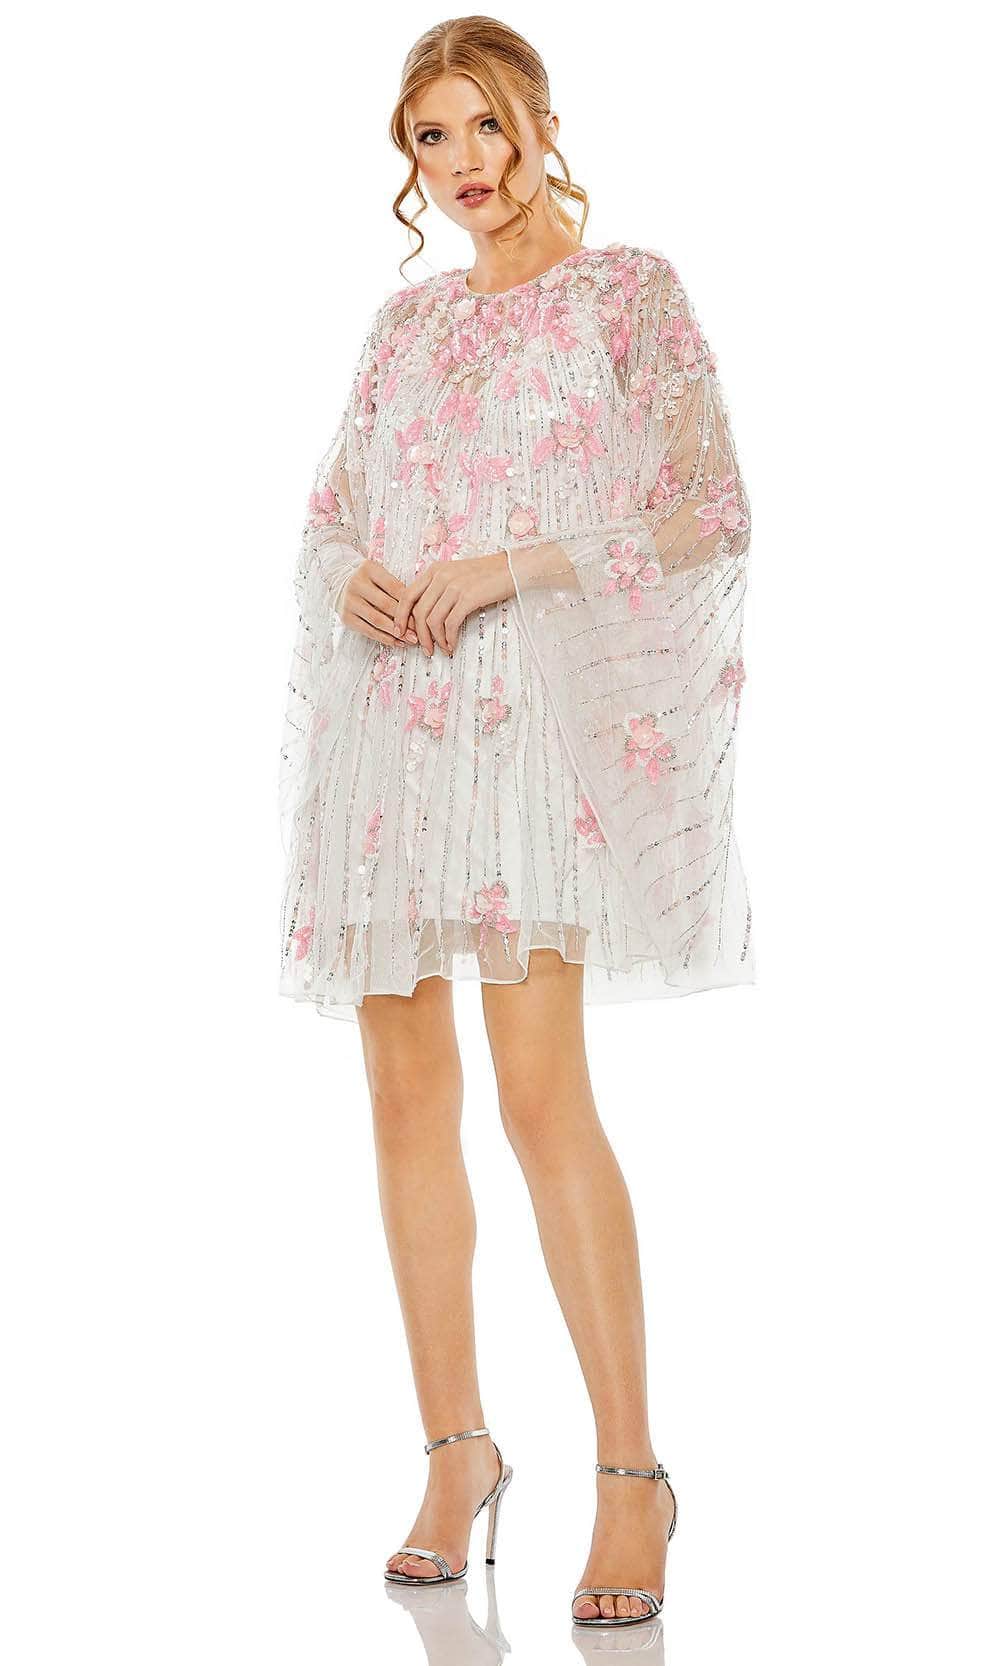 Mac Duggal 5917 - Embellished Trapeze Dress
